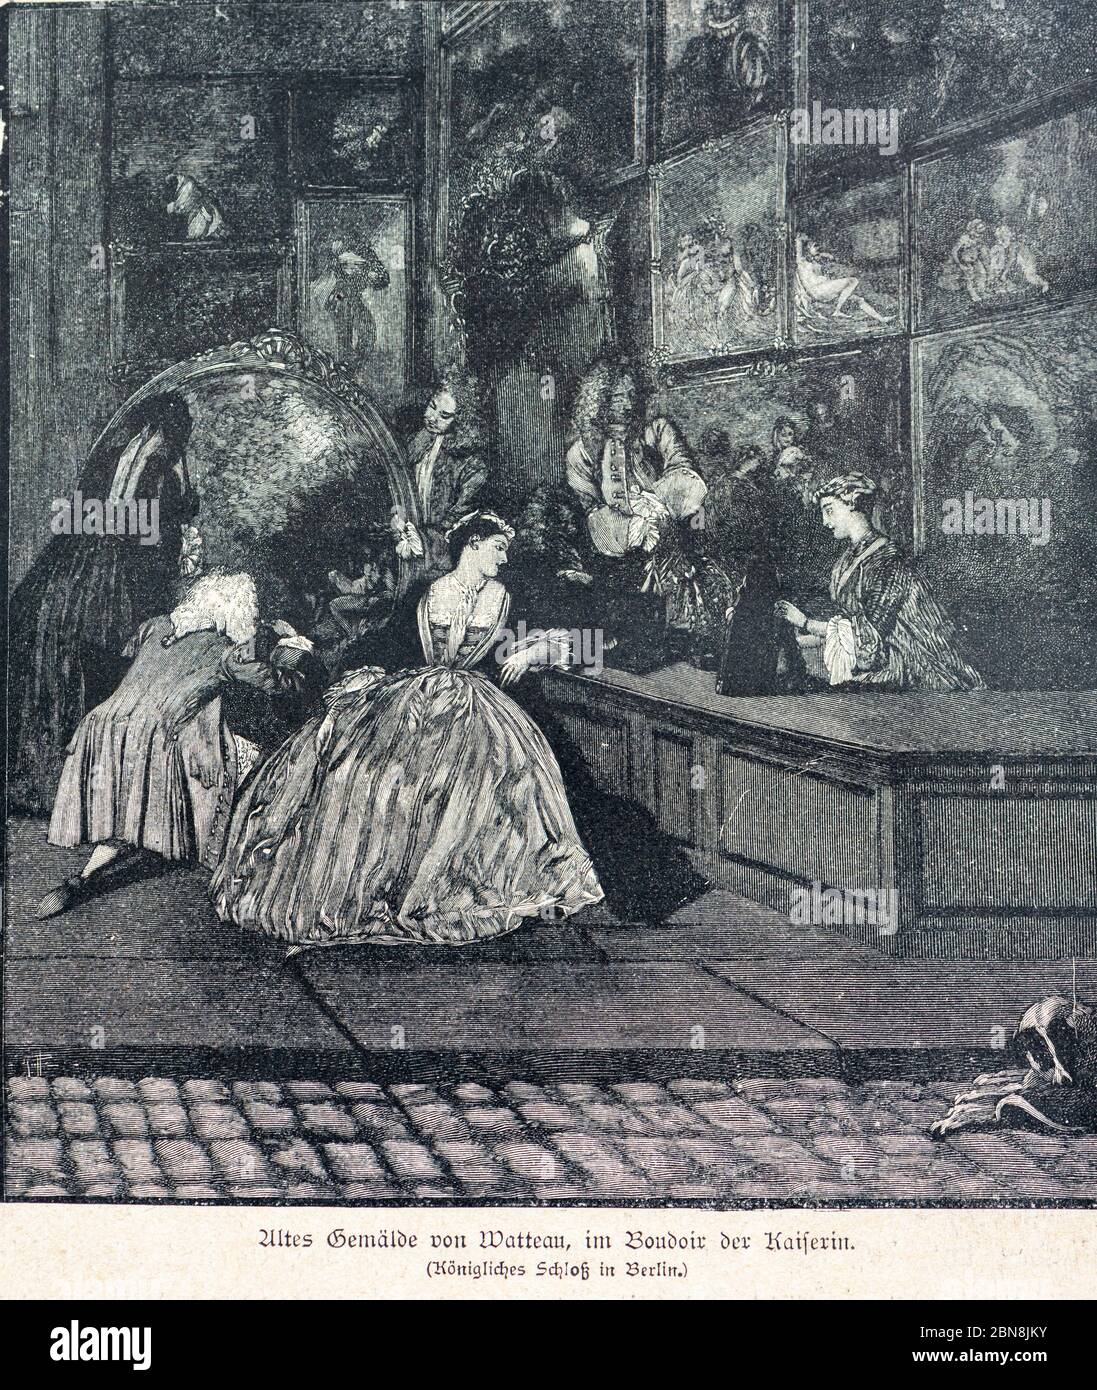 Illustration titled 'Altes Gemälde von Watteau, im Boudoir der Kaiserin' or Old Painting of Watteau, Dressing room of the Empress', Berlin, Stock Photo